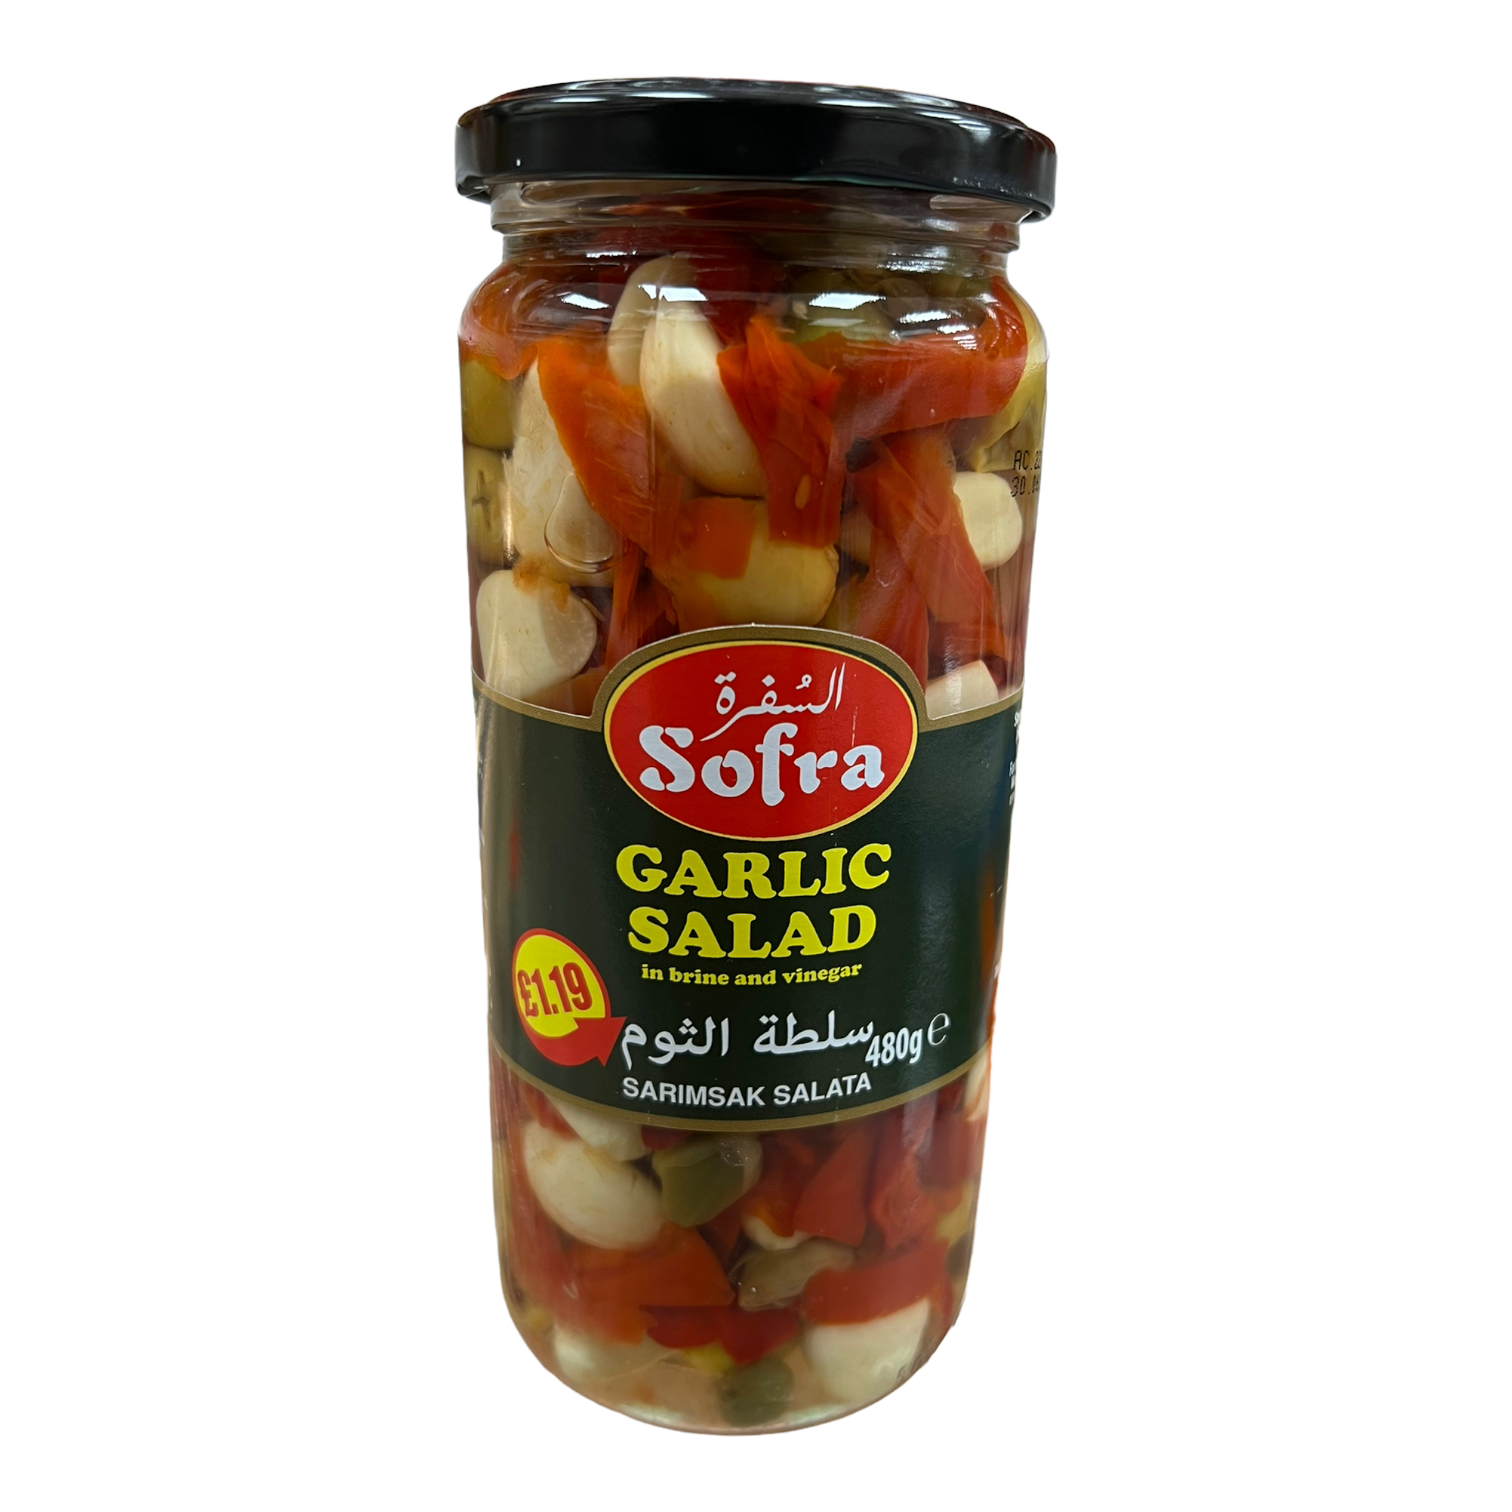 Sofra Garlic Salad